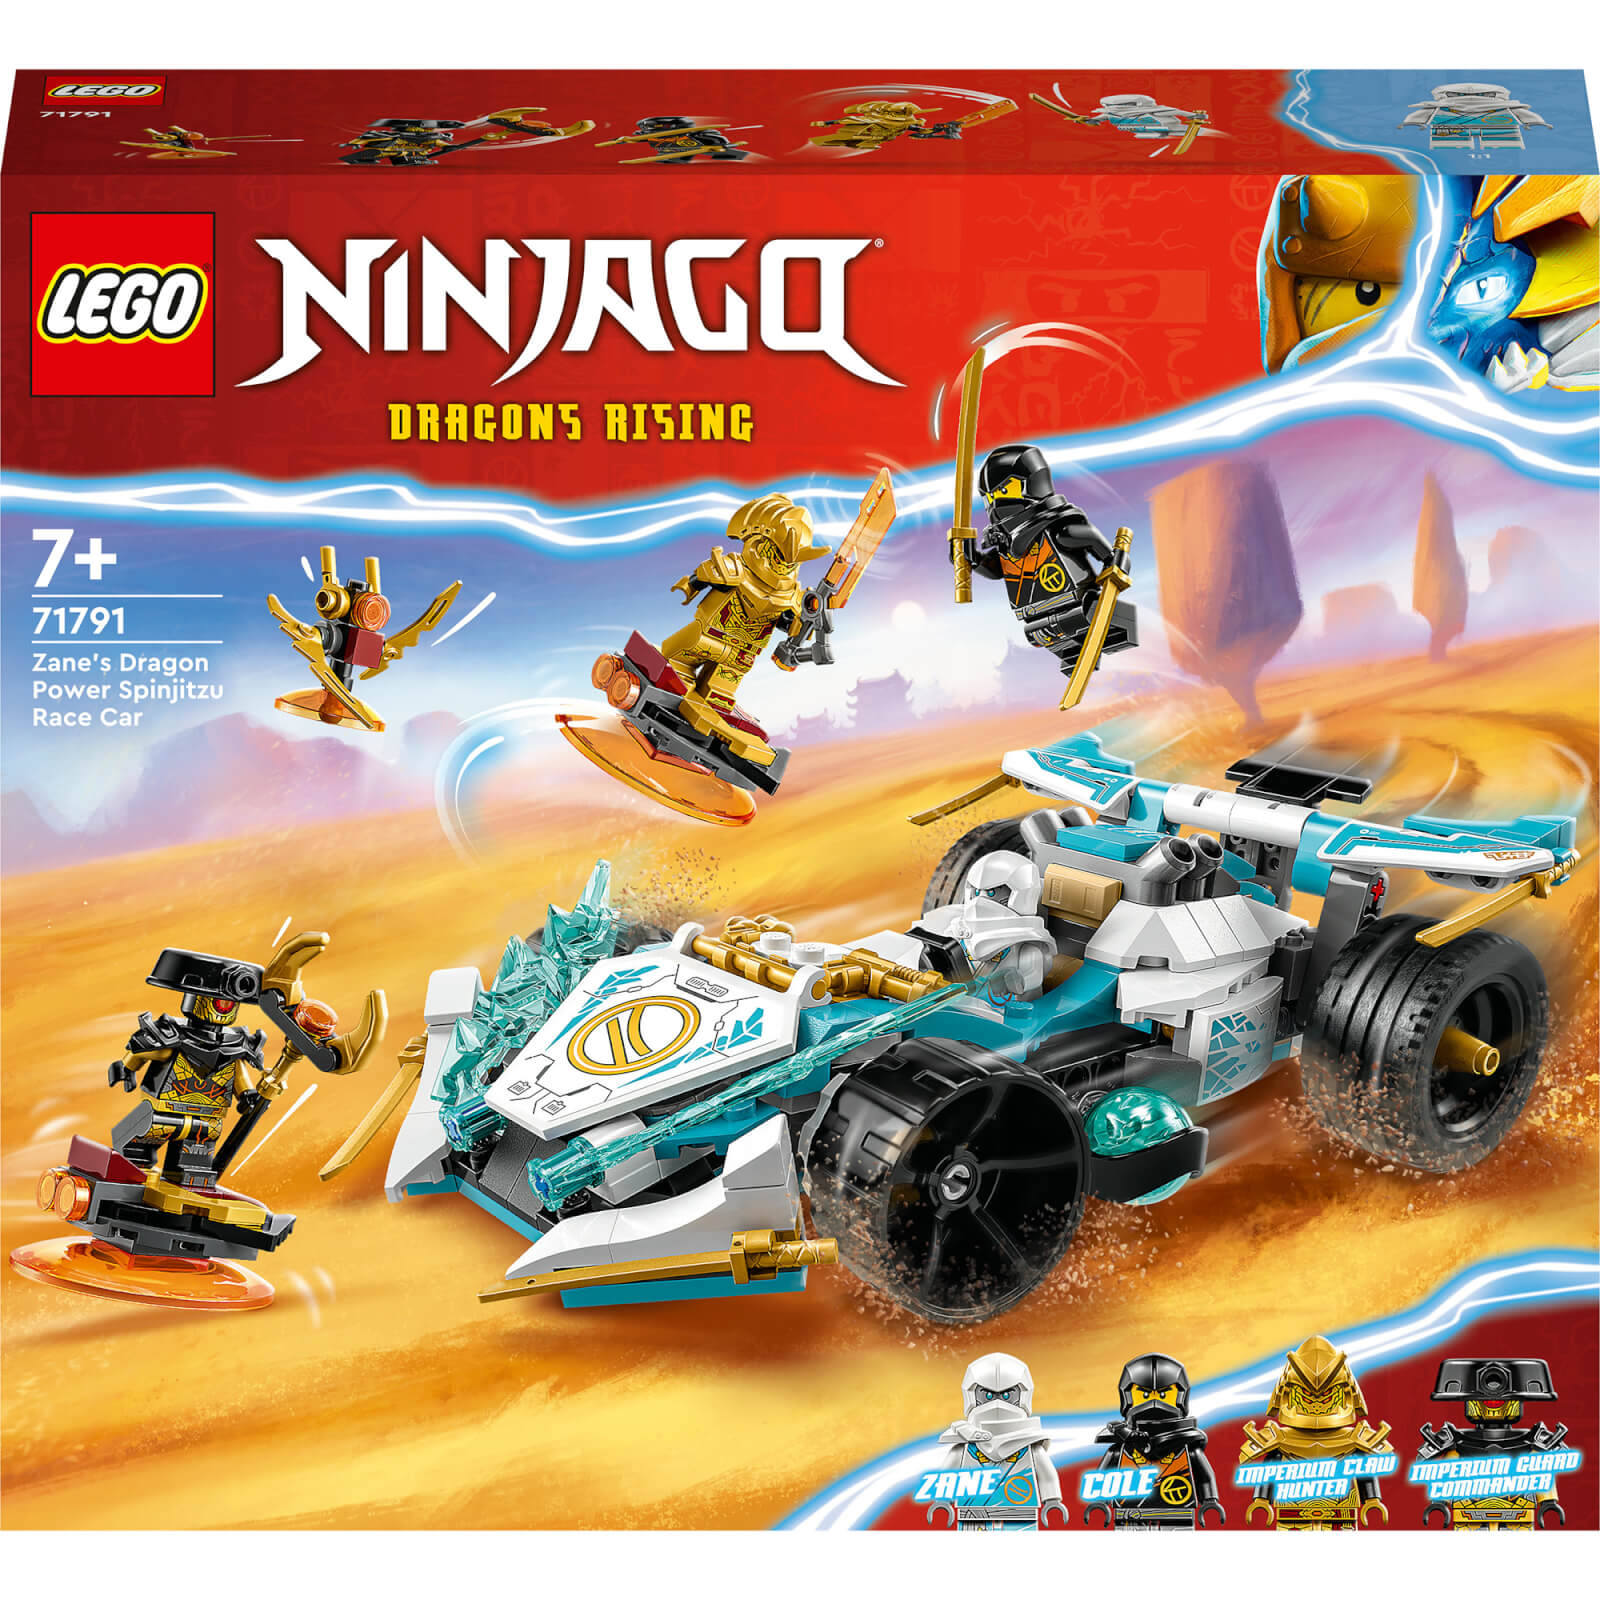 Image of 71791 LEGO® NINJAGO Zanes Dragon Power Spinjitzu racing car